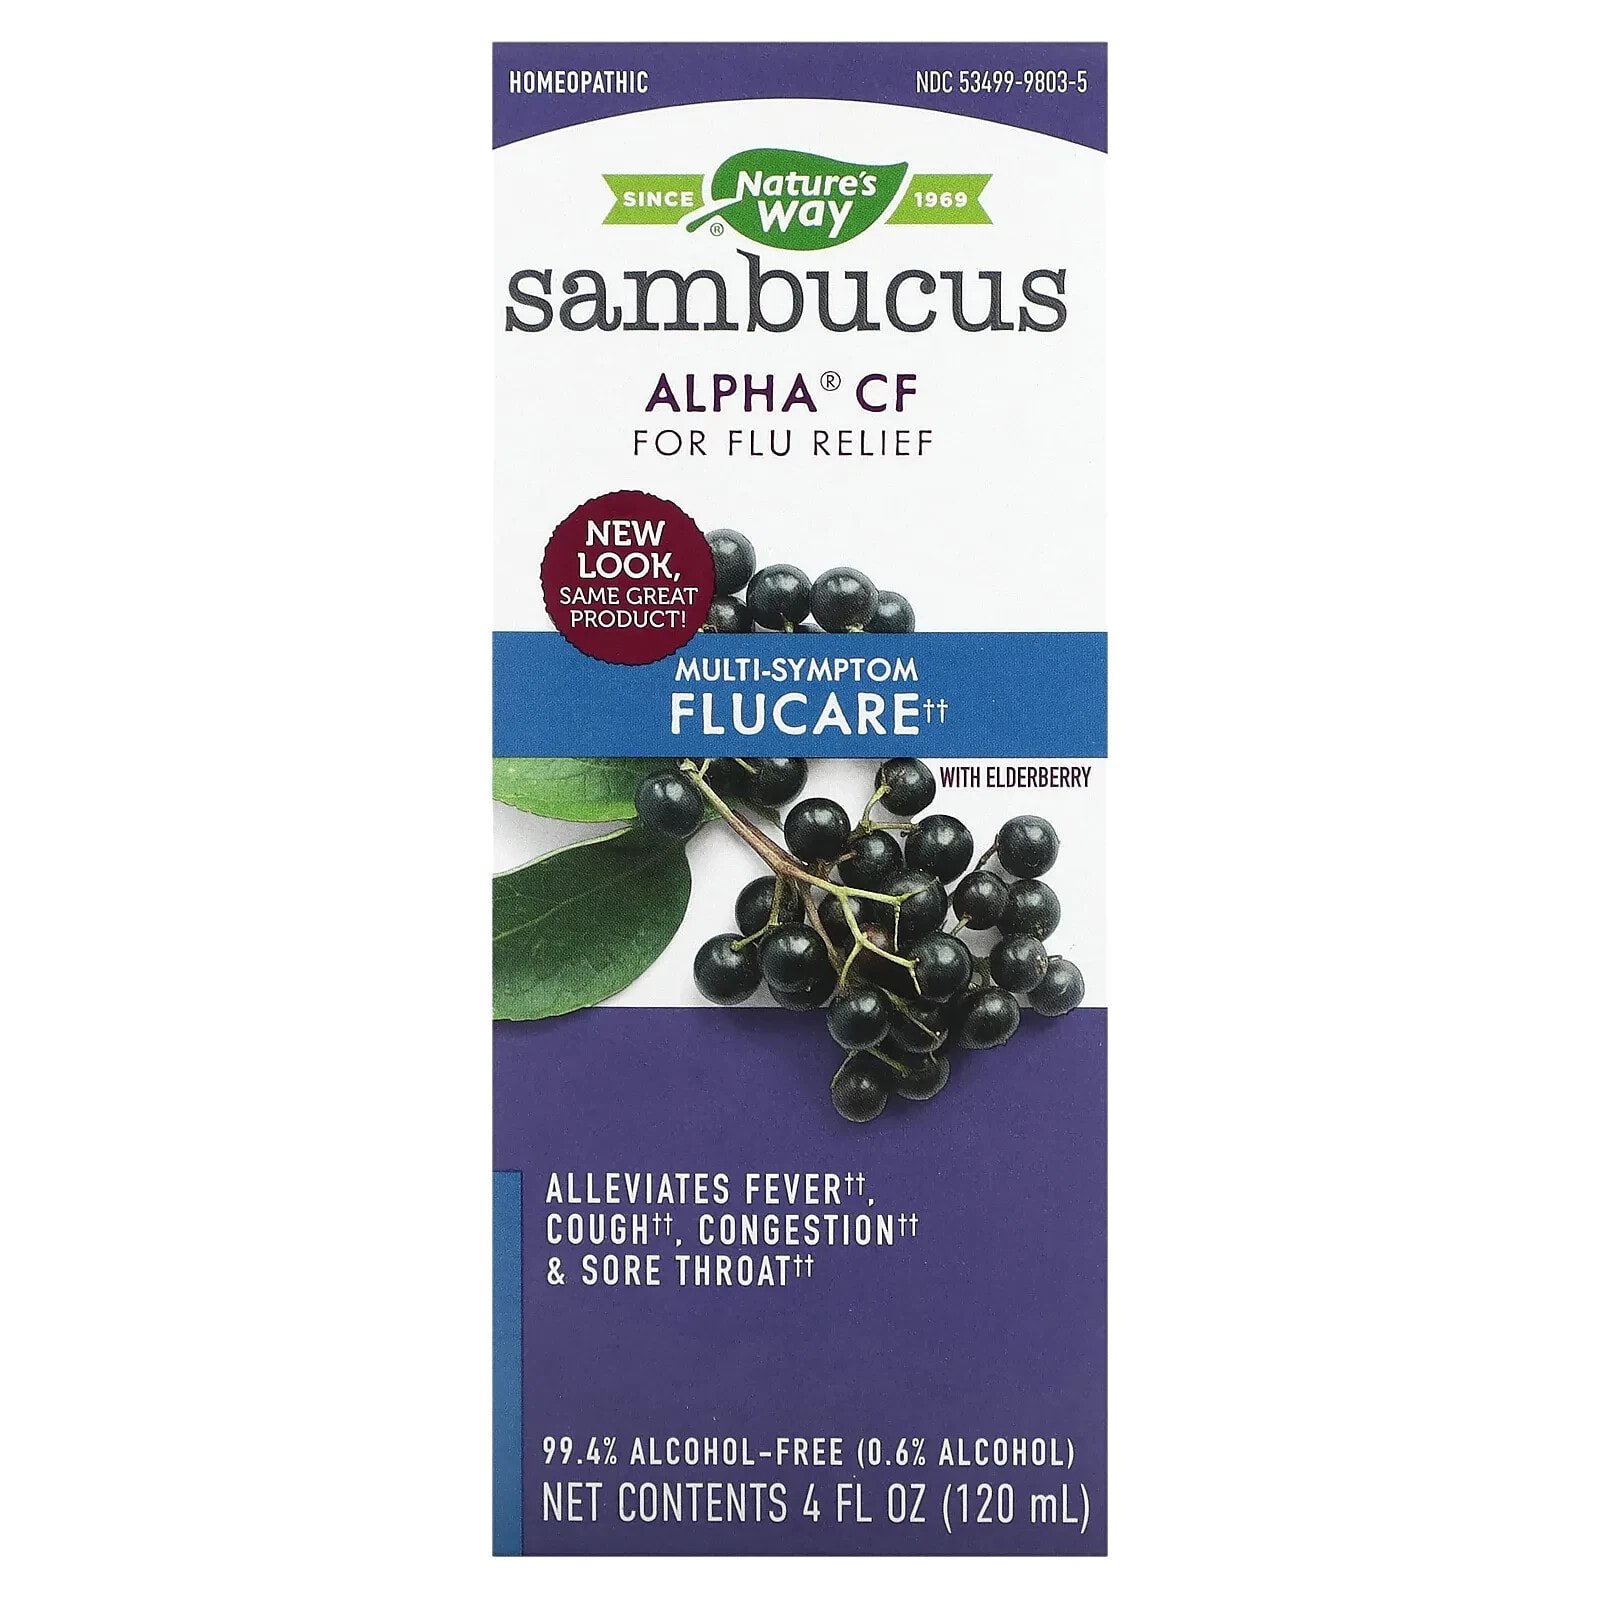 Sambucus, Alpha CF, Multi-Symptom Flucare, With Elderberry, 4 fl oz (120 ml)